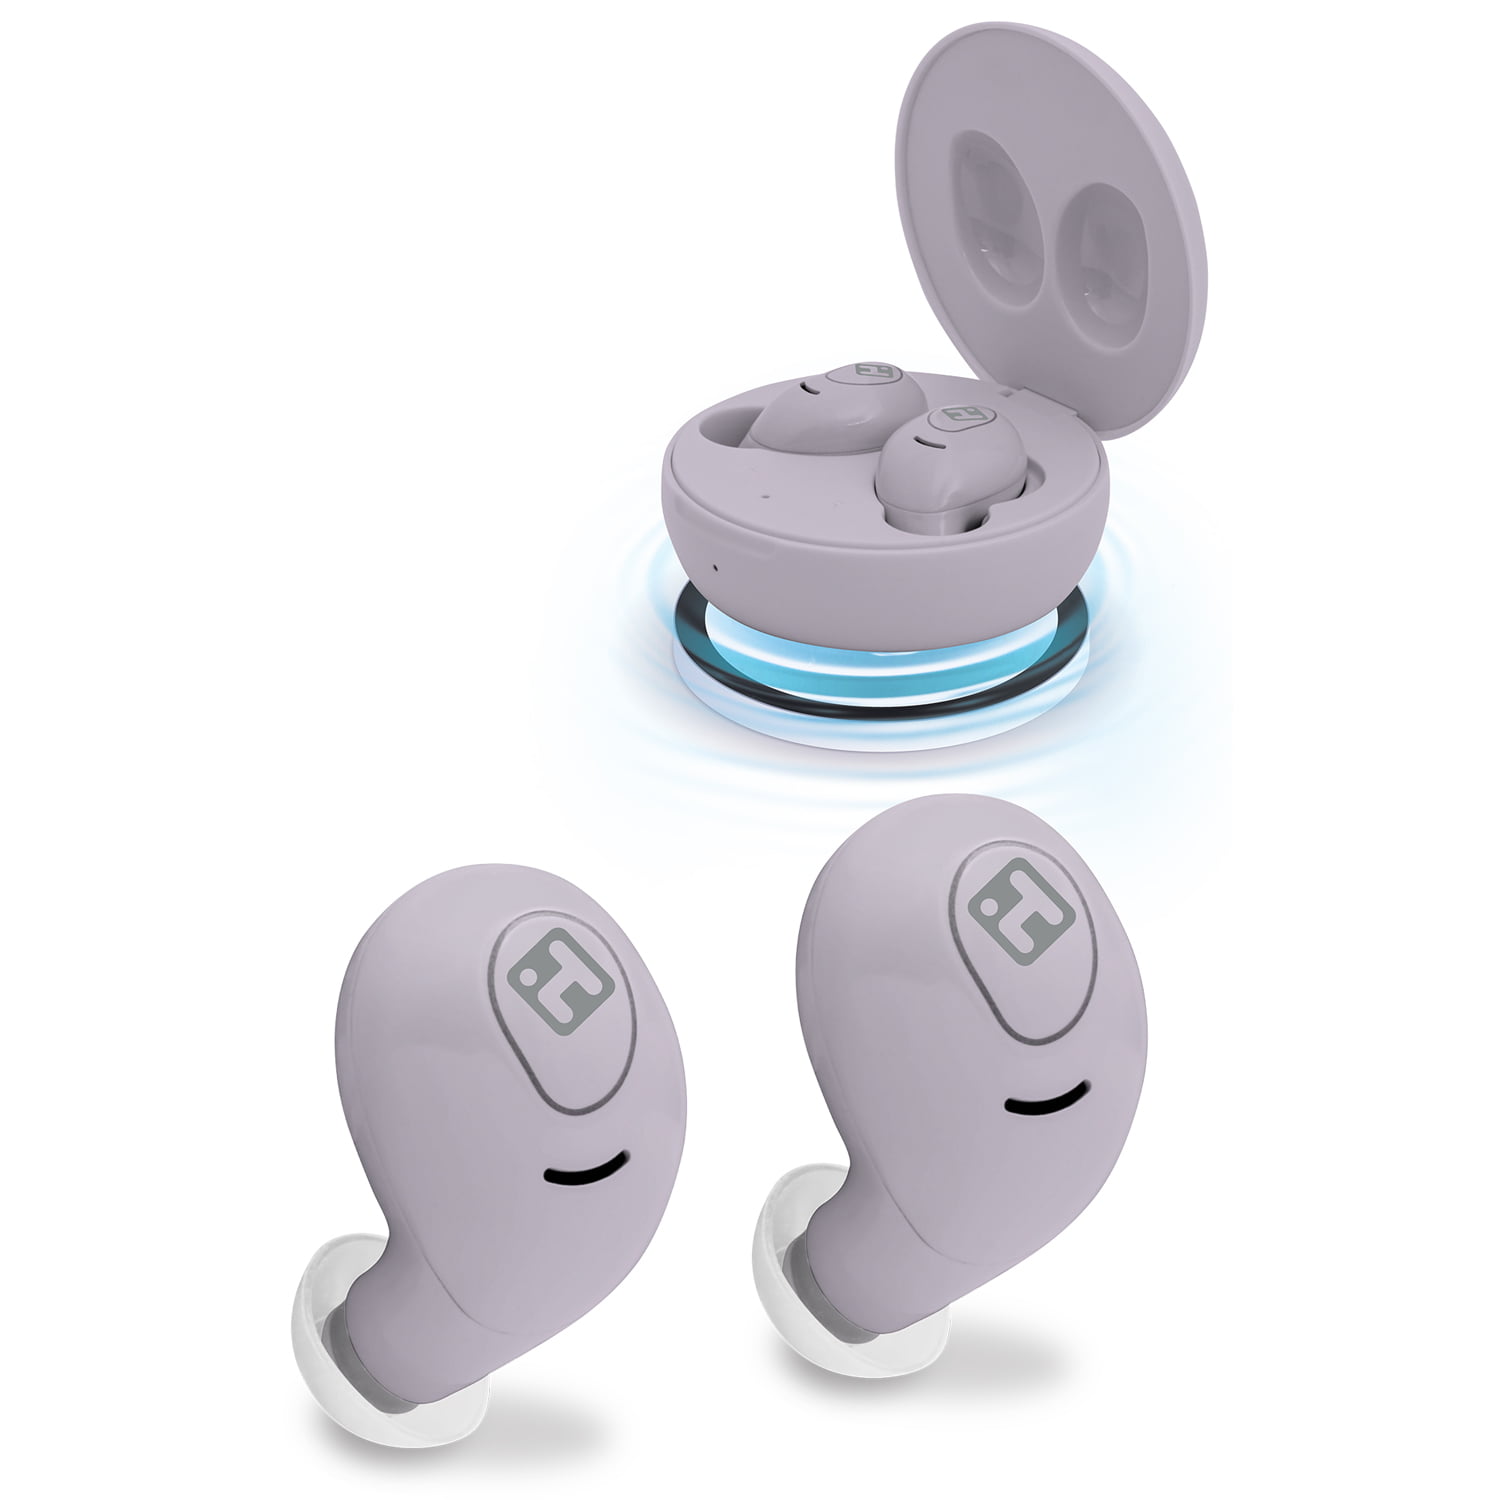 Pairing Bytech Wireless Earbuds: A Quick Guide